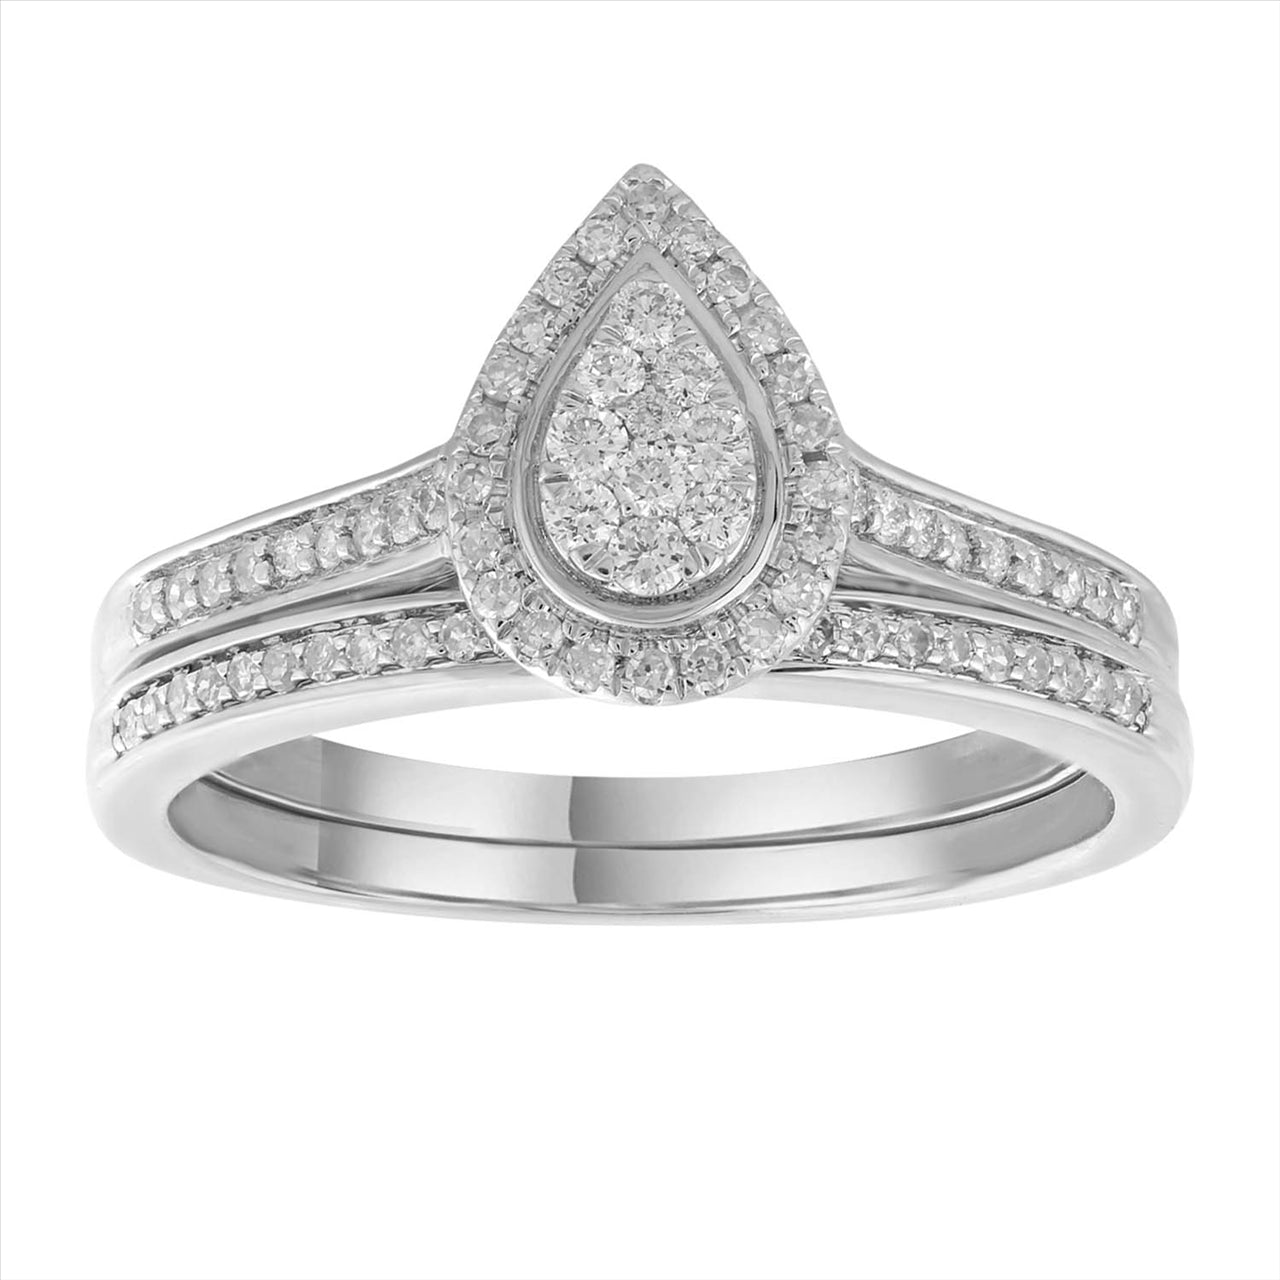 Diamond Engagement and Wedder Ring Set